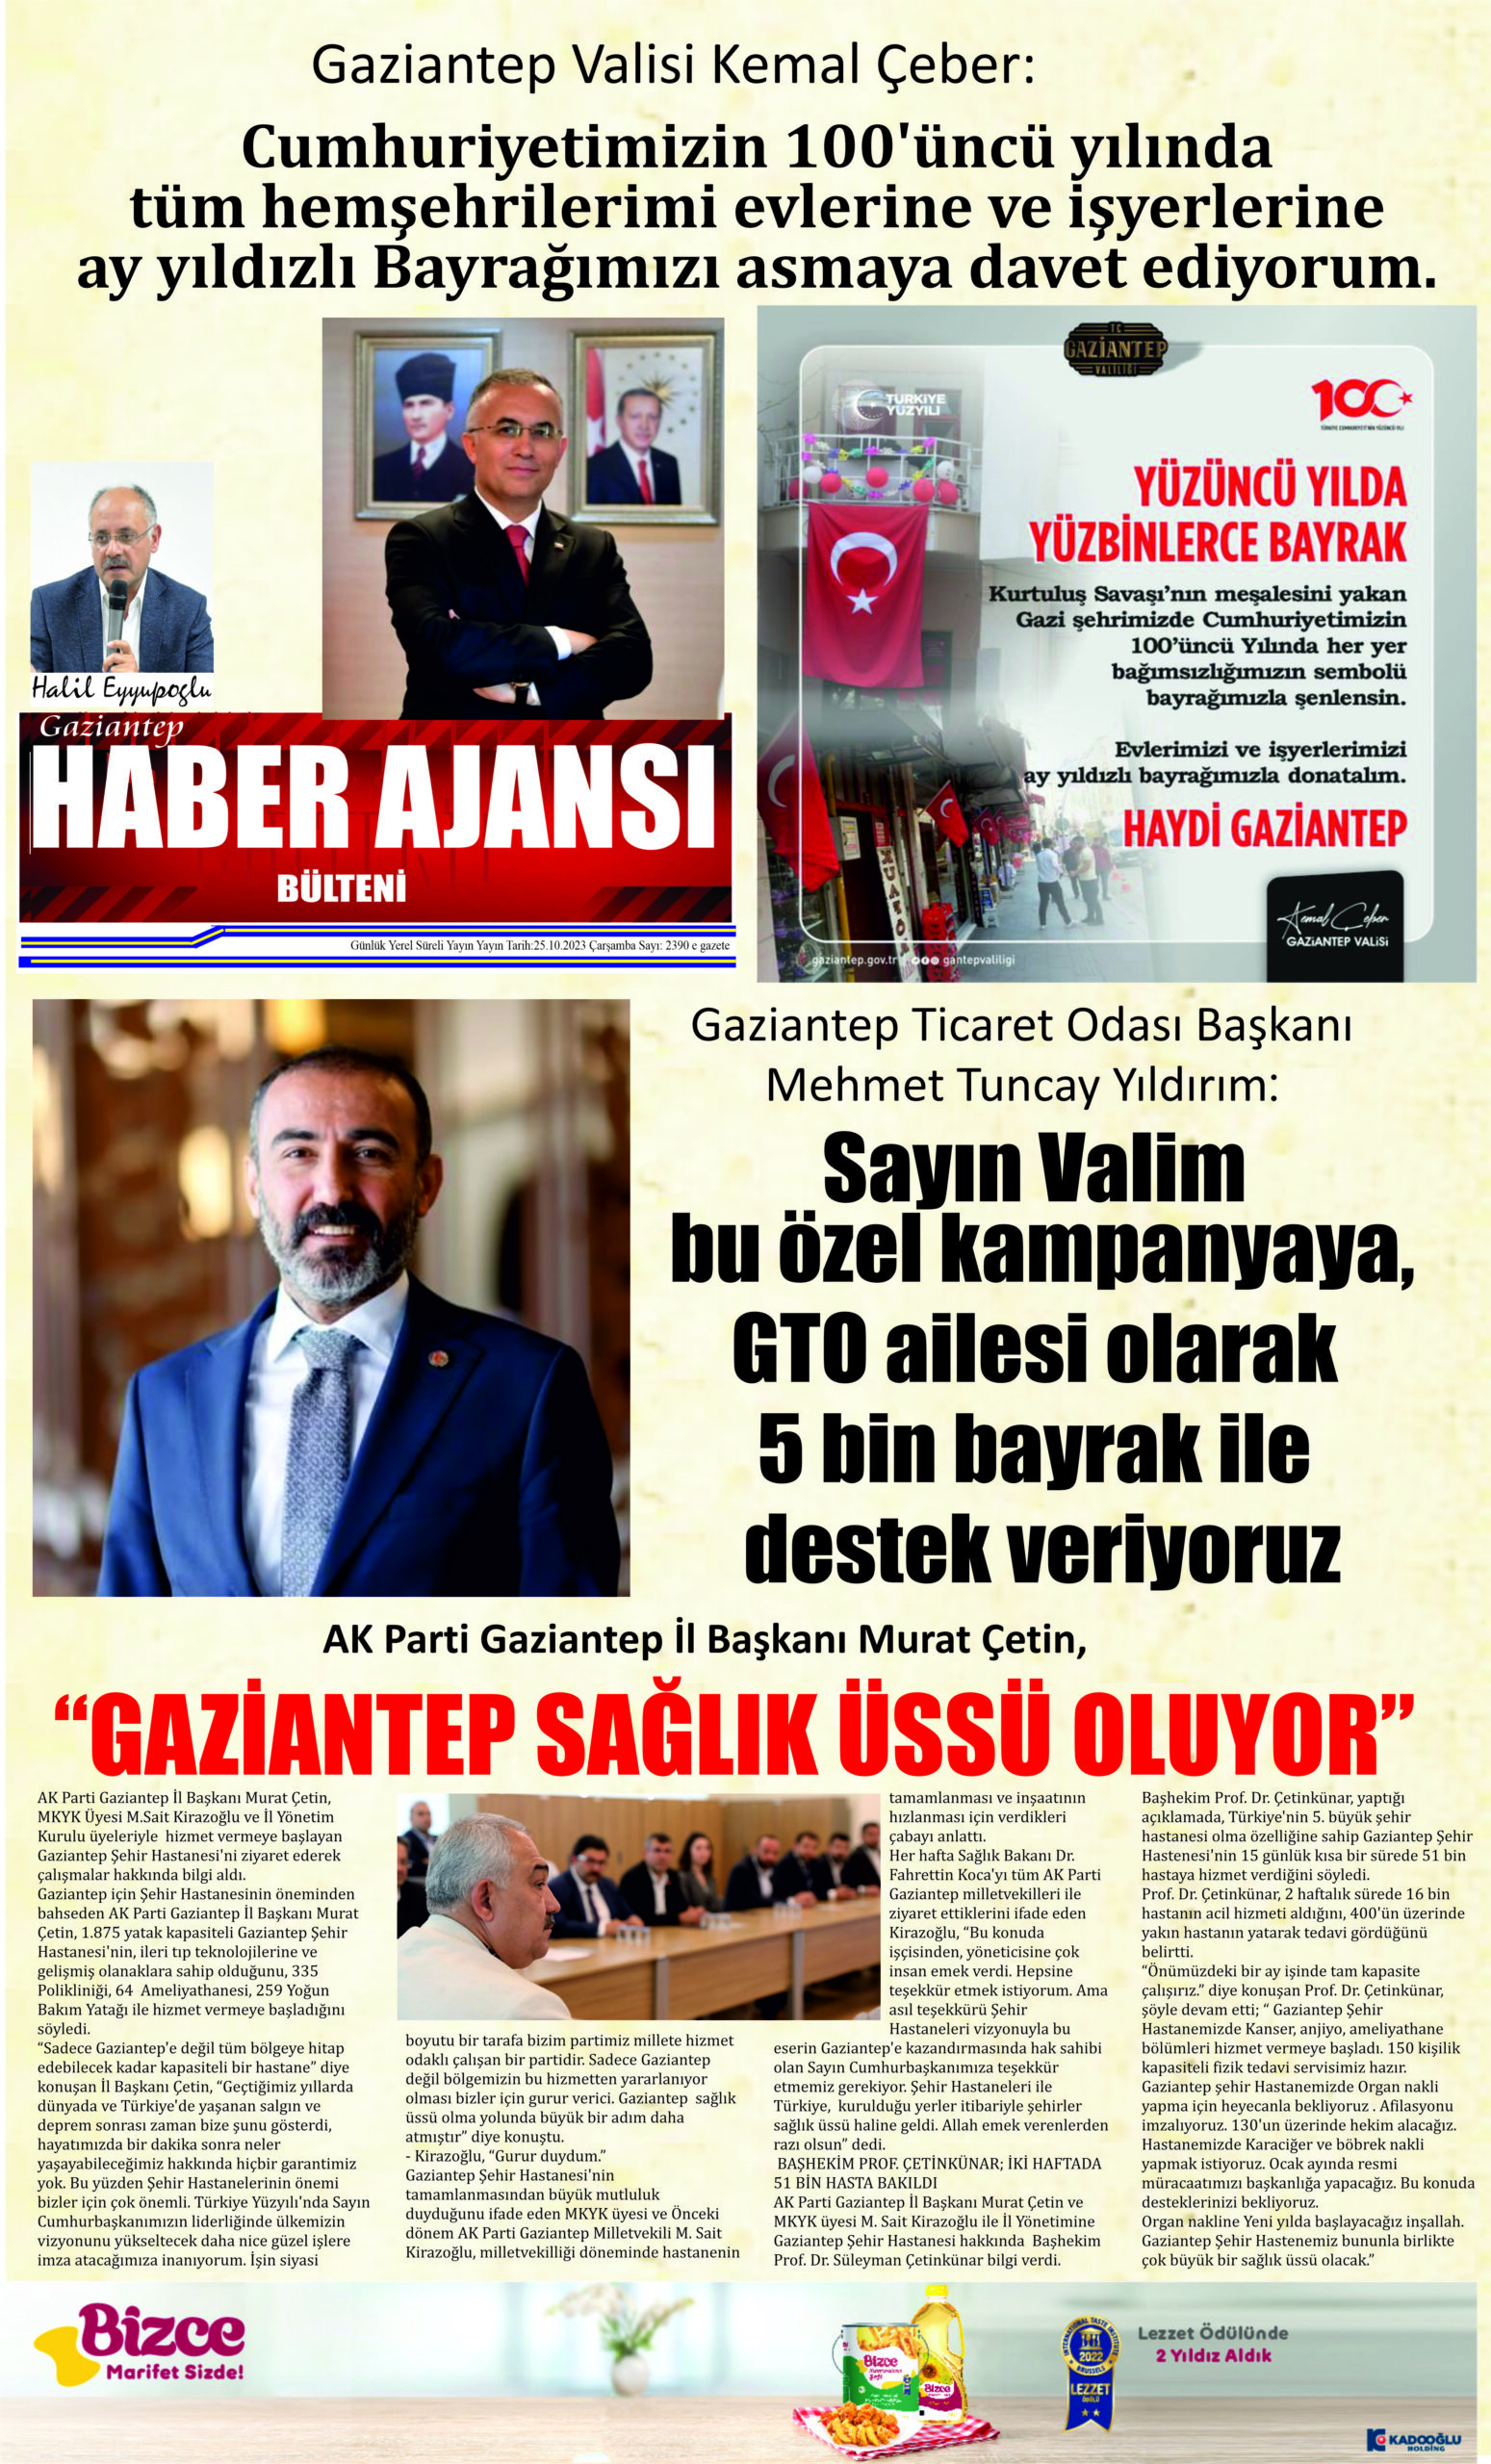 Gaziantep Haber Ajansı Bülteni Çarşamba 25.10.2023 e gazete